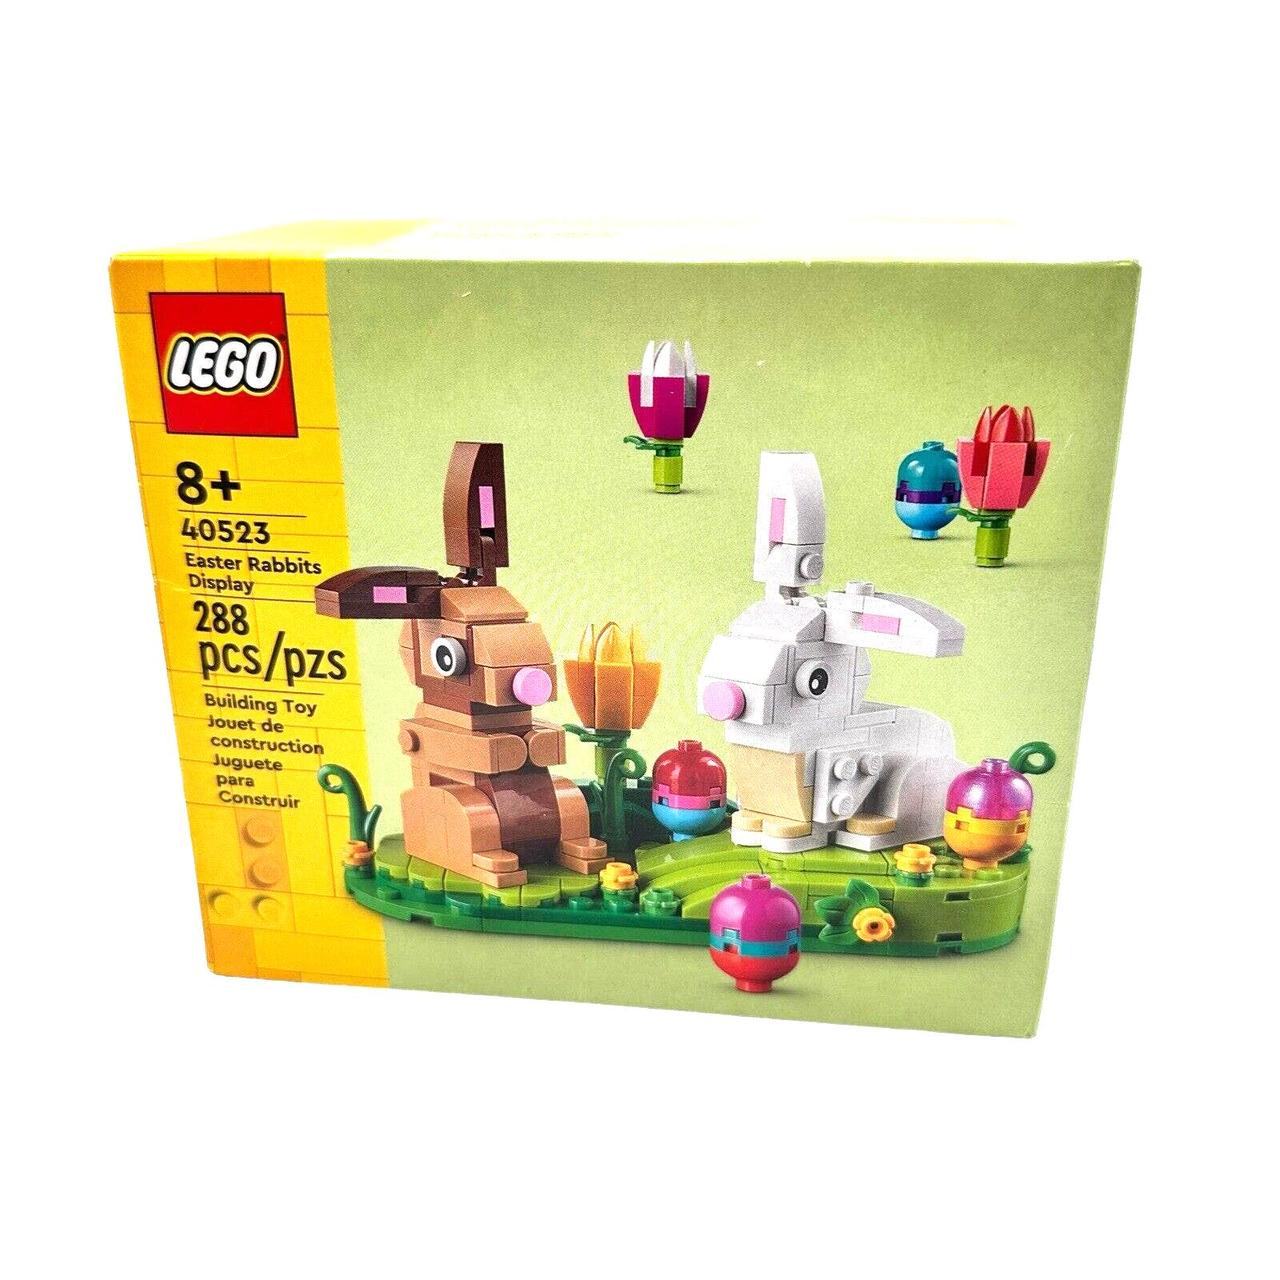 NEW LEGO 40523 Easter Rabbits Display 288pcs Spring... - Depop